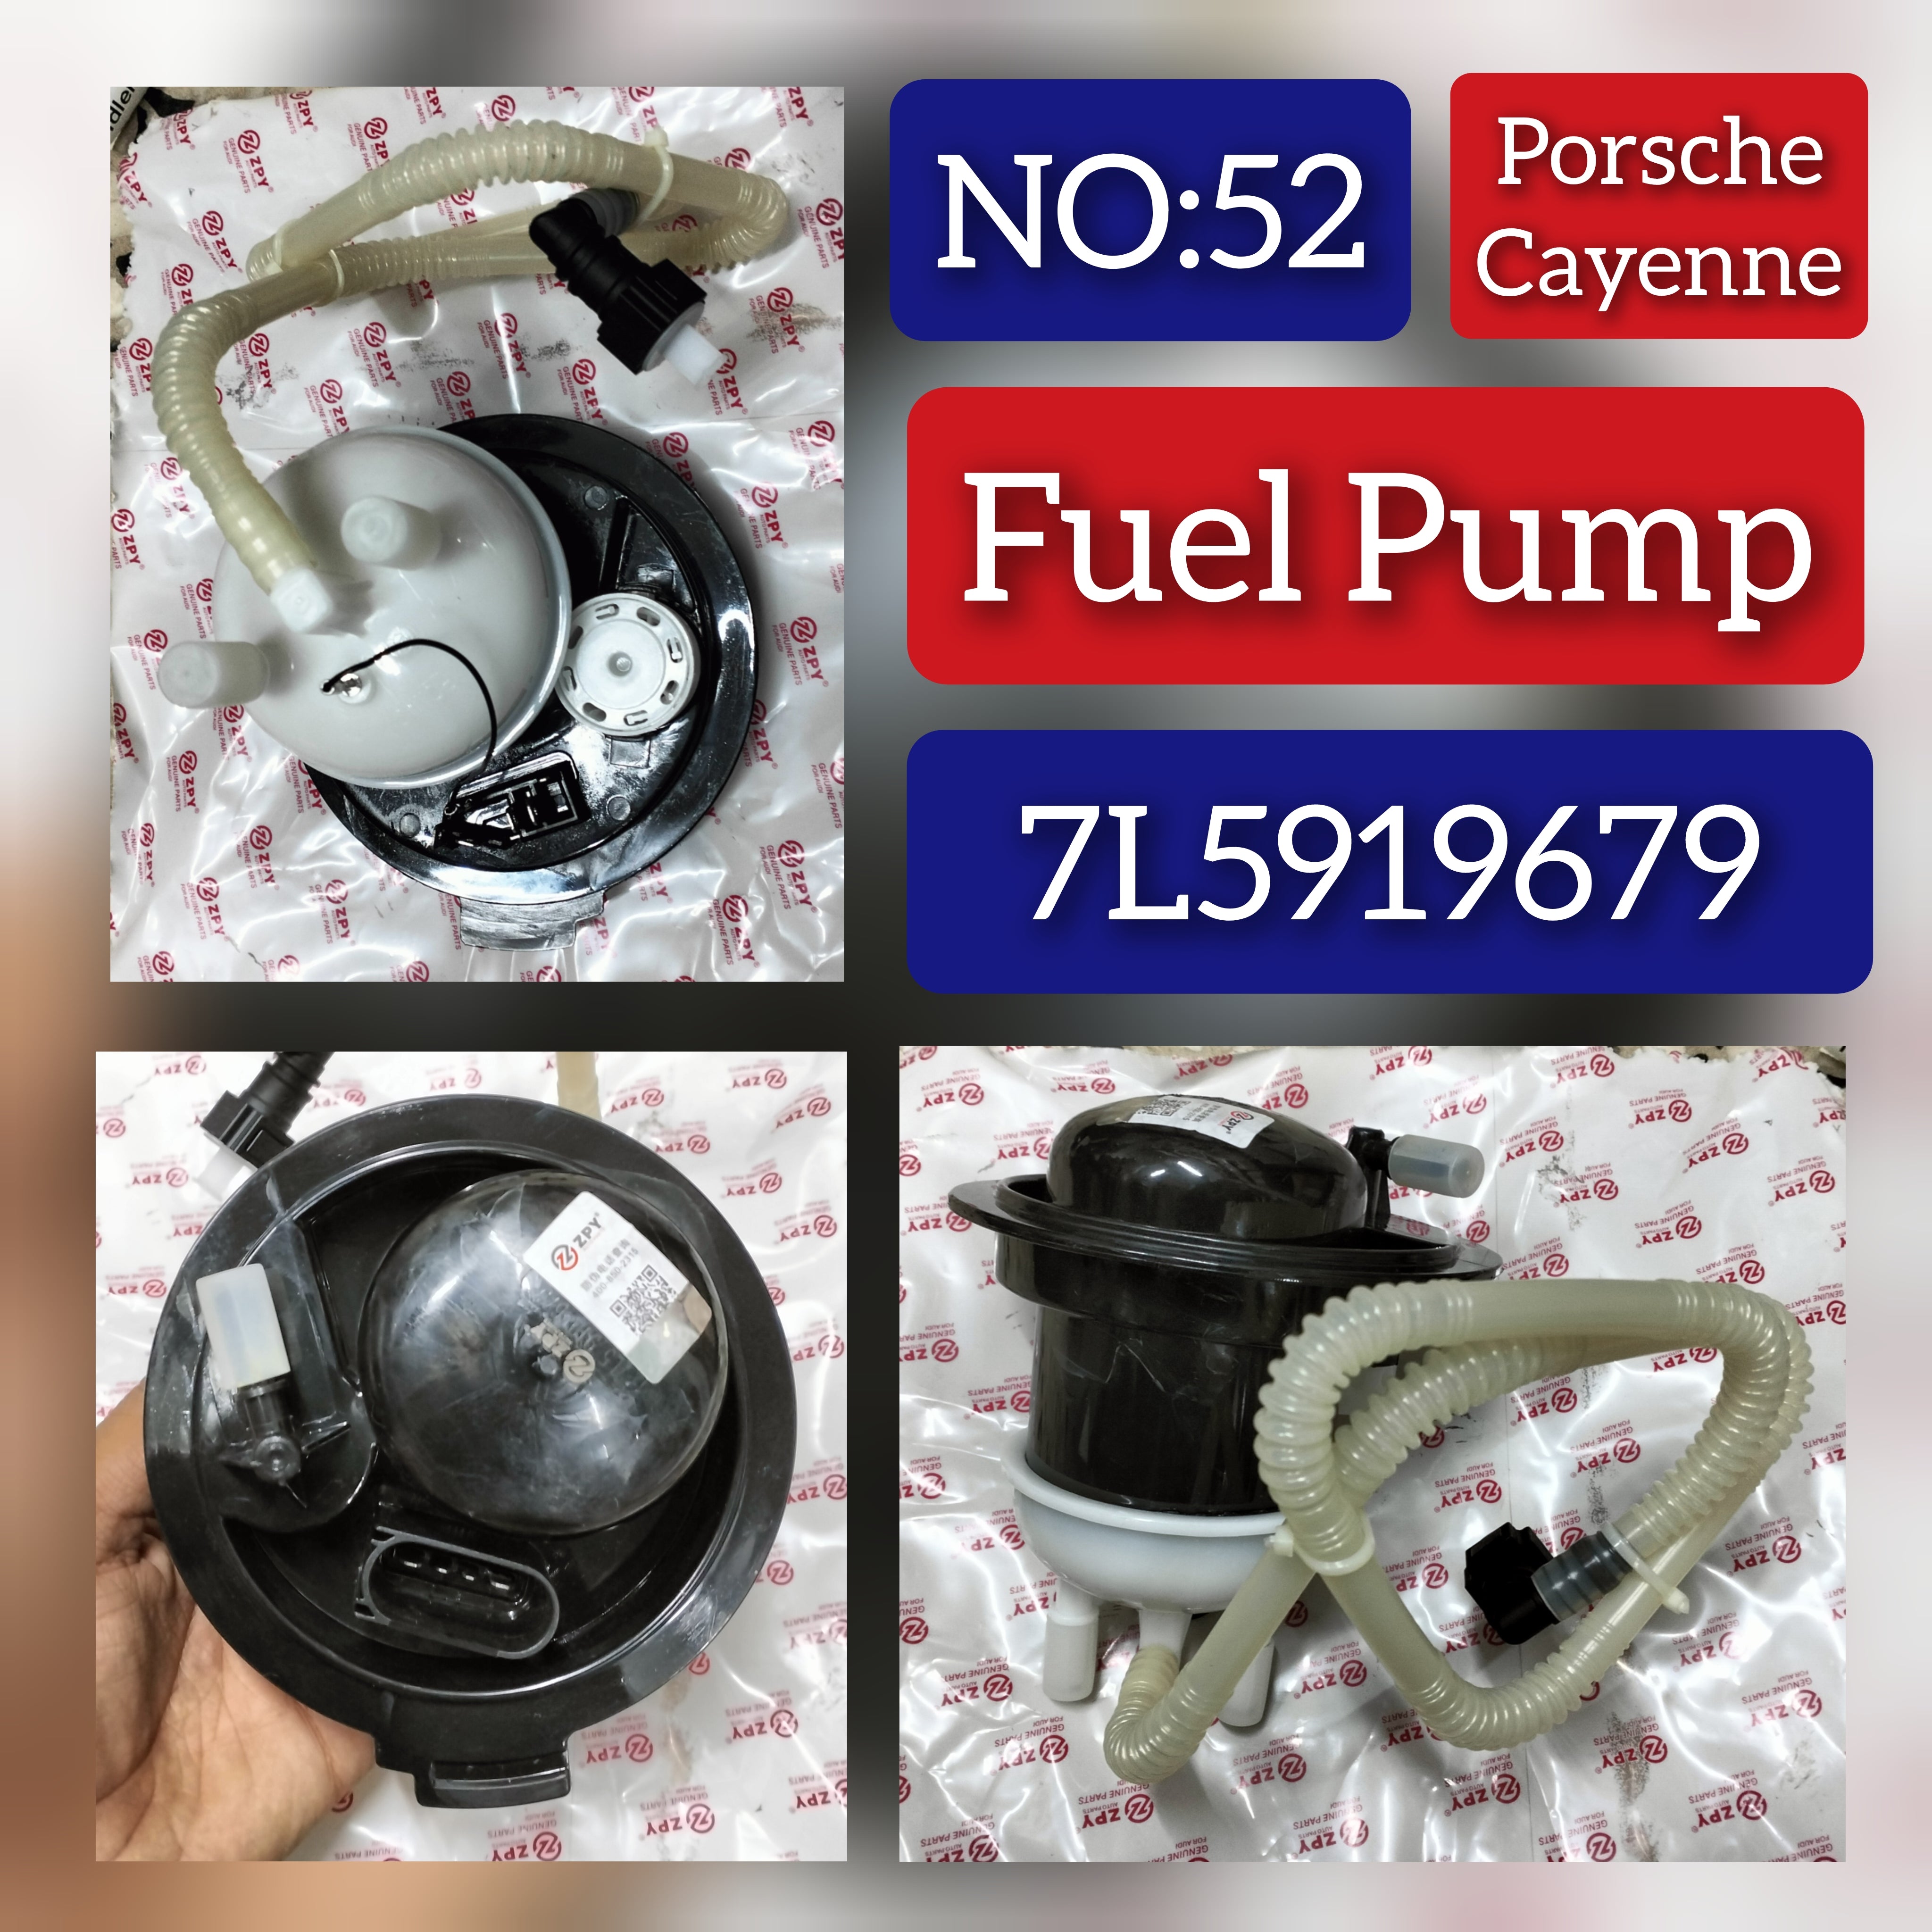 Fuel Pump  7L5919679 For PORSCHE CAYENNE Tag-F-52